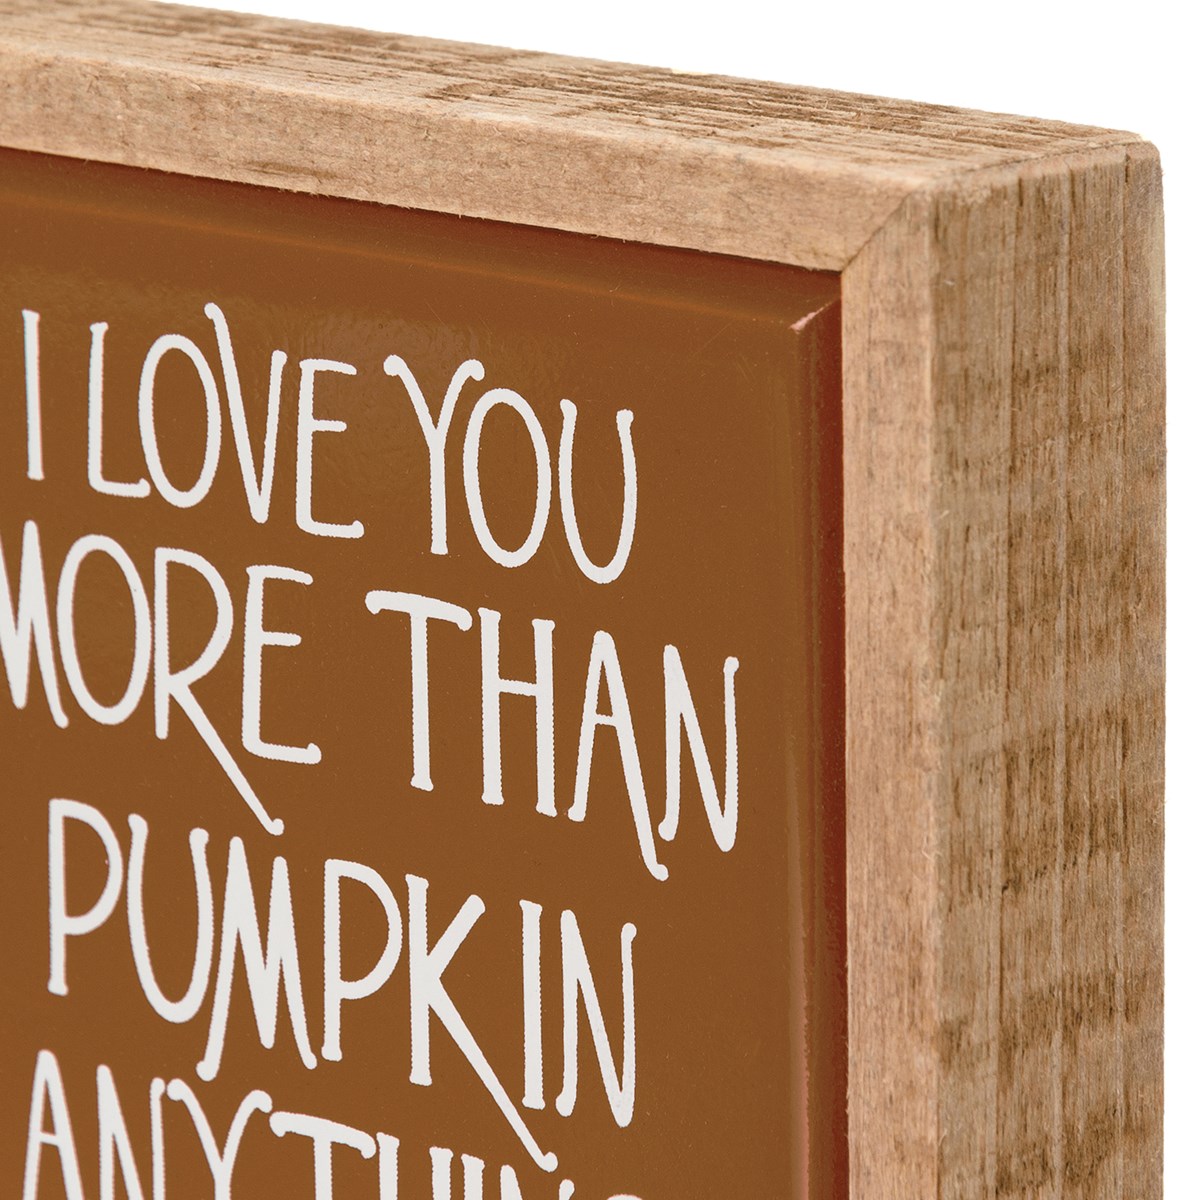 Love You More Than Pumpkin Box Sign Mini - Wood